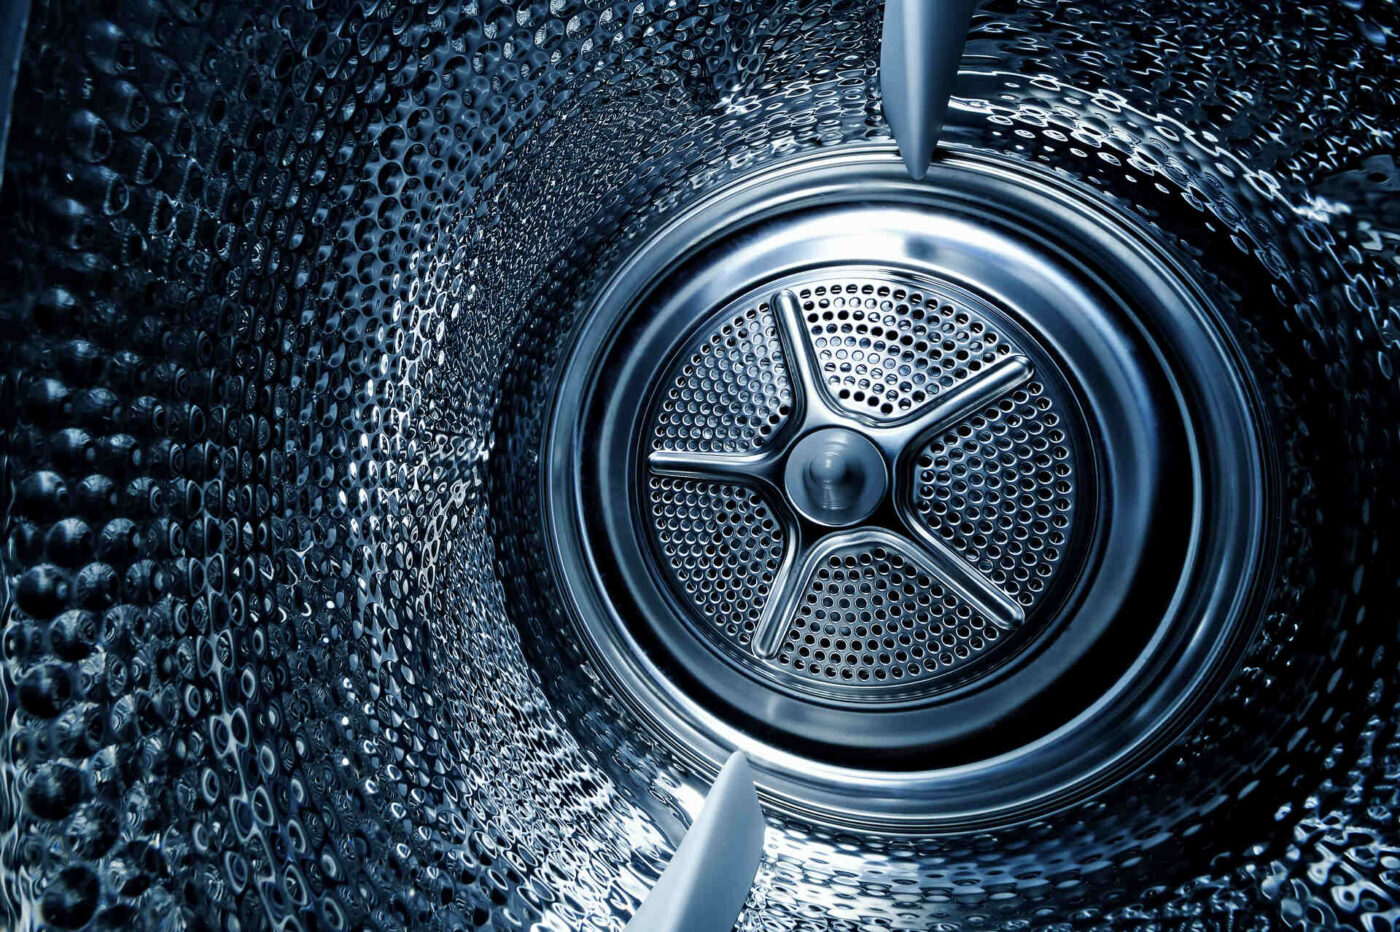 Inside of a washing machine's drum